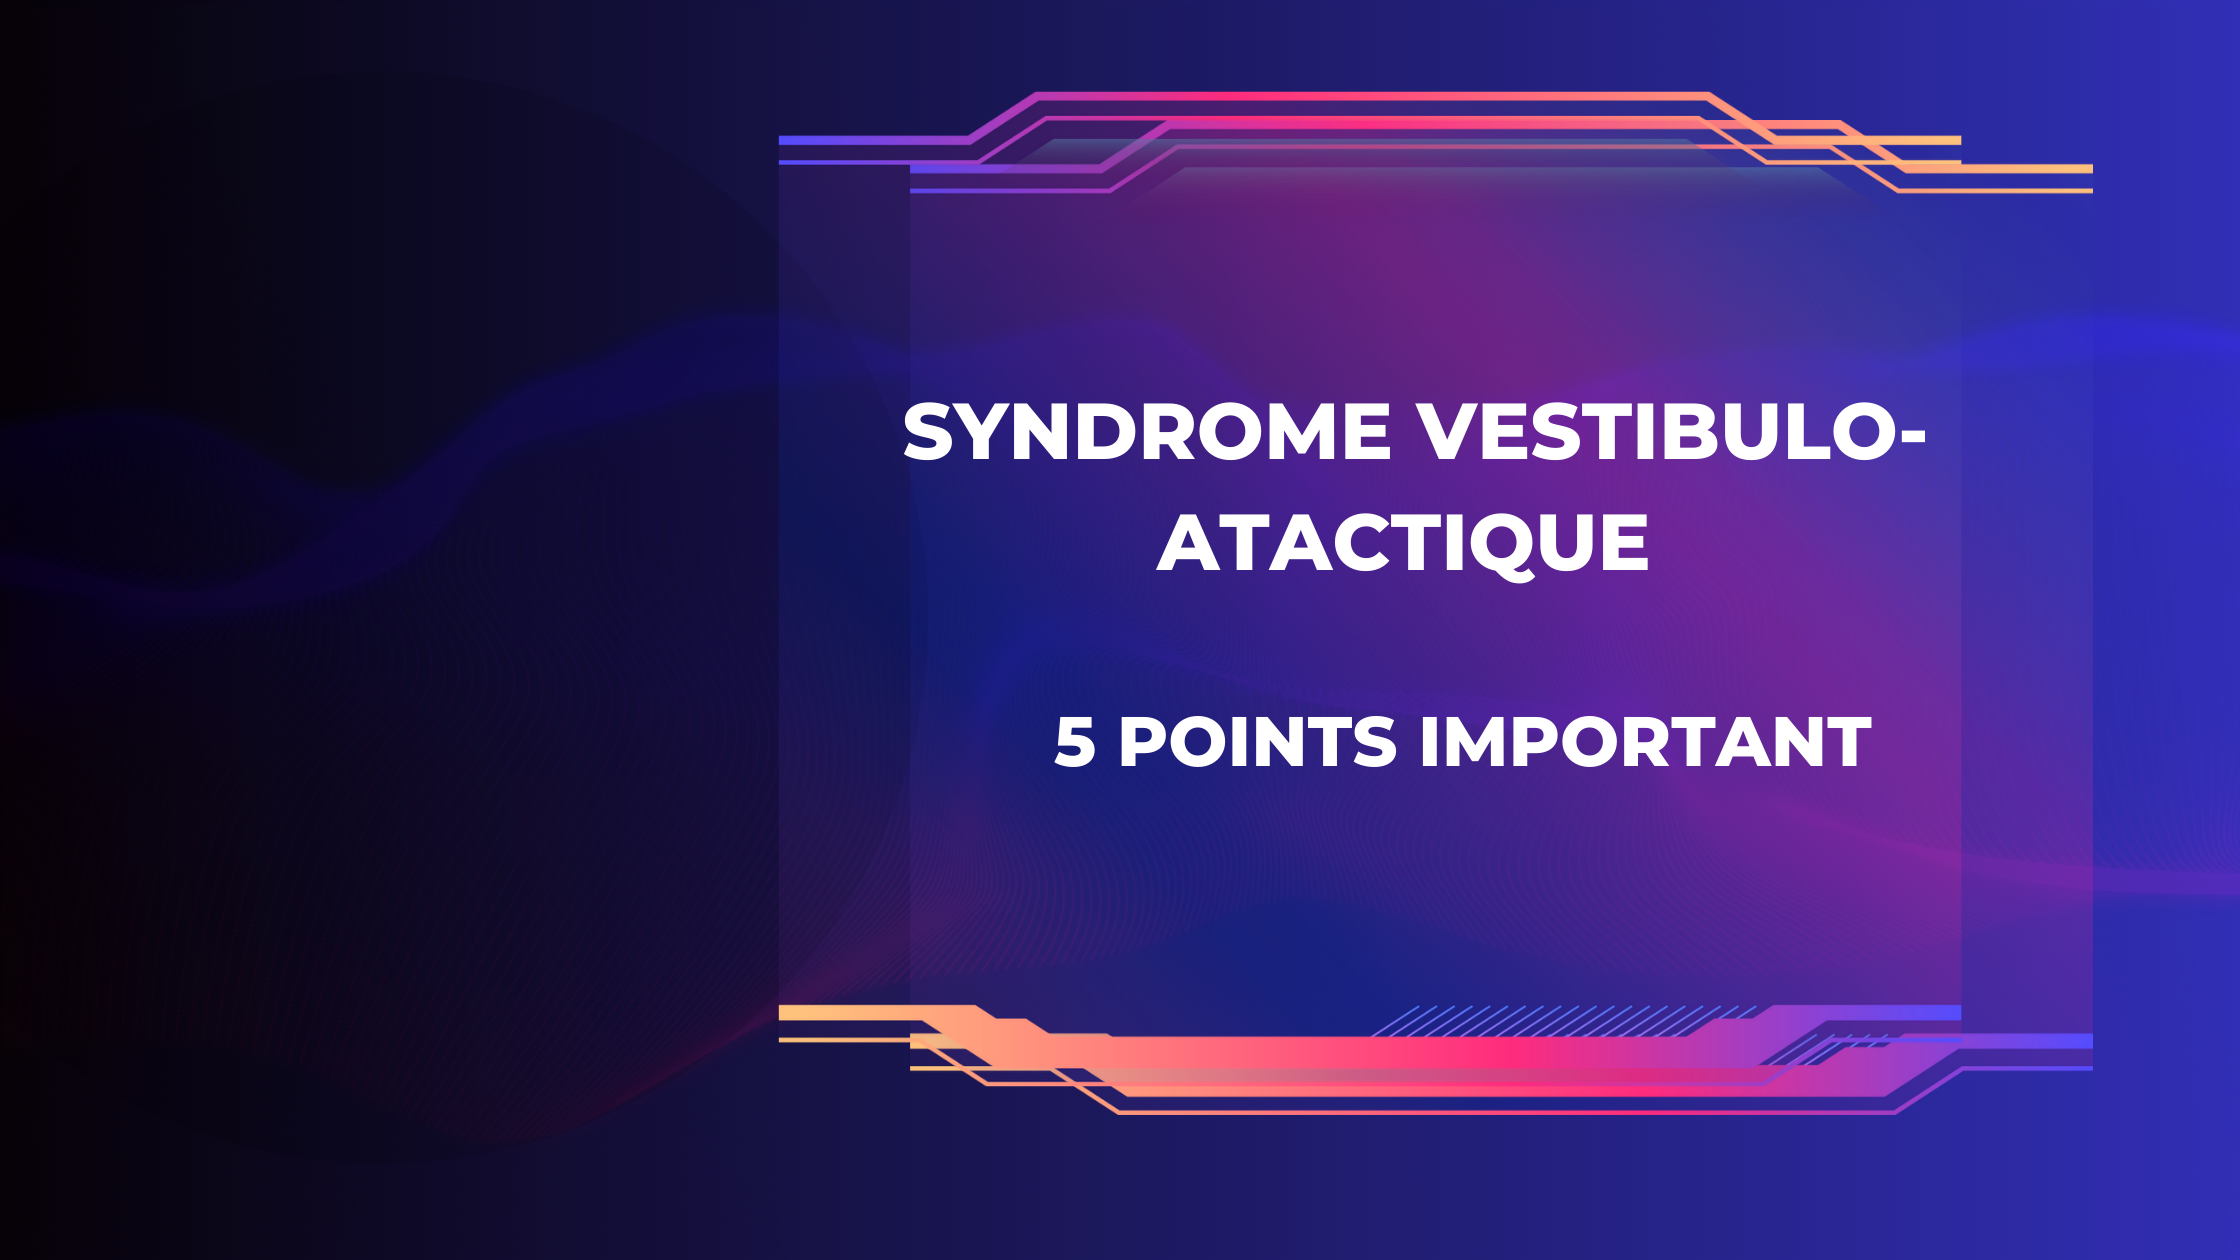 syndrome vestibulo-atactique |5 Points Important